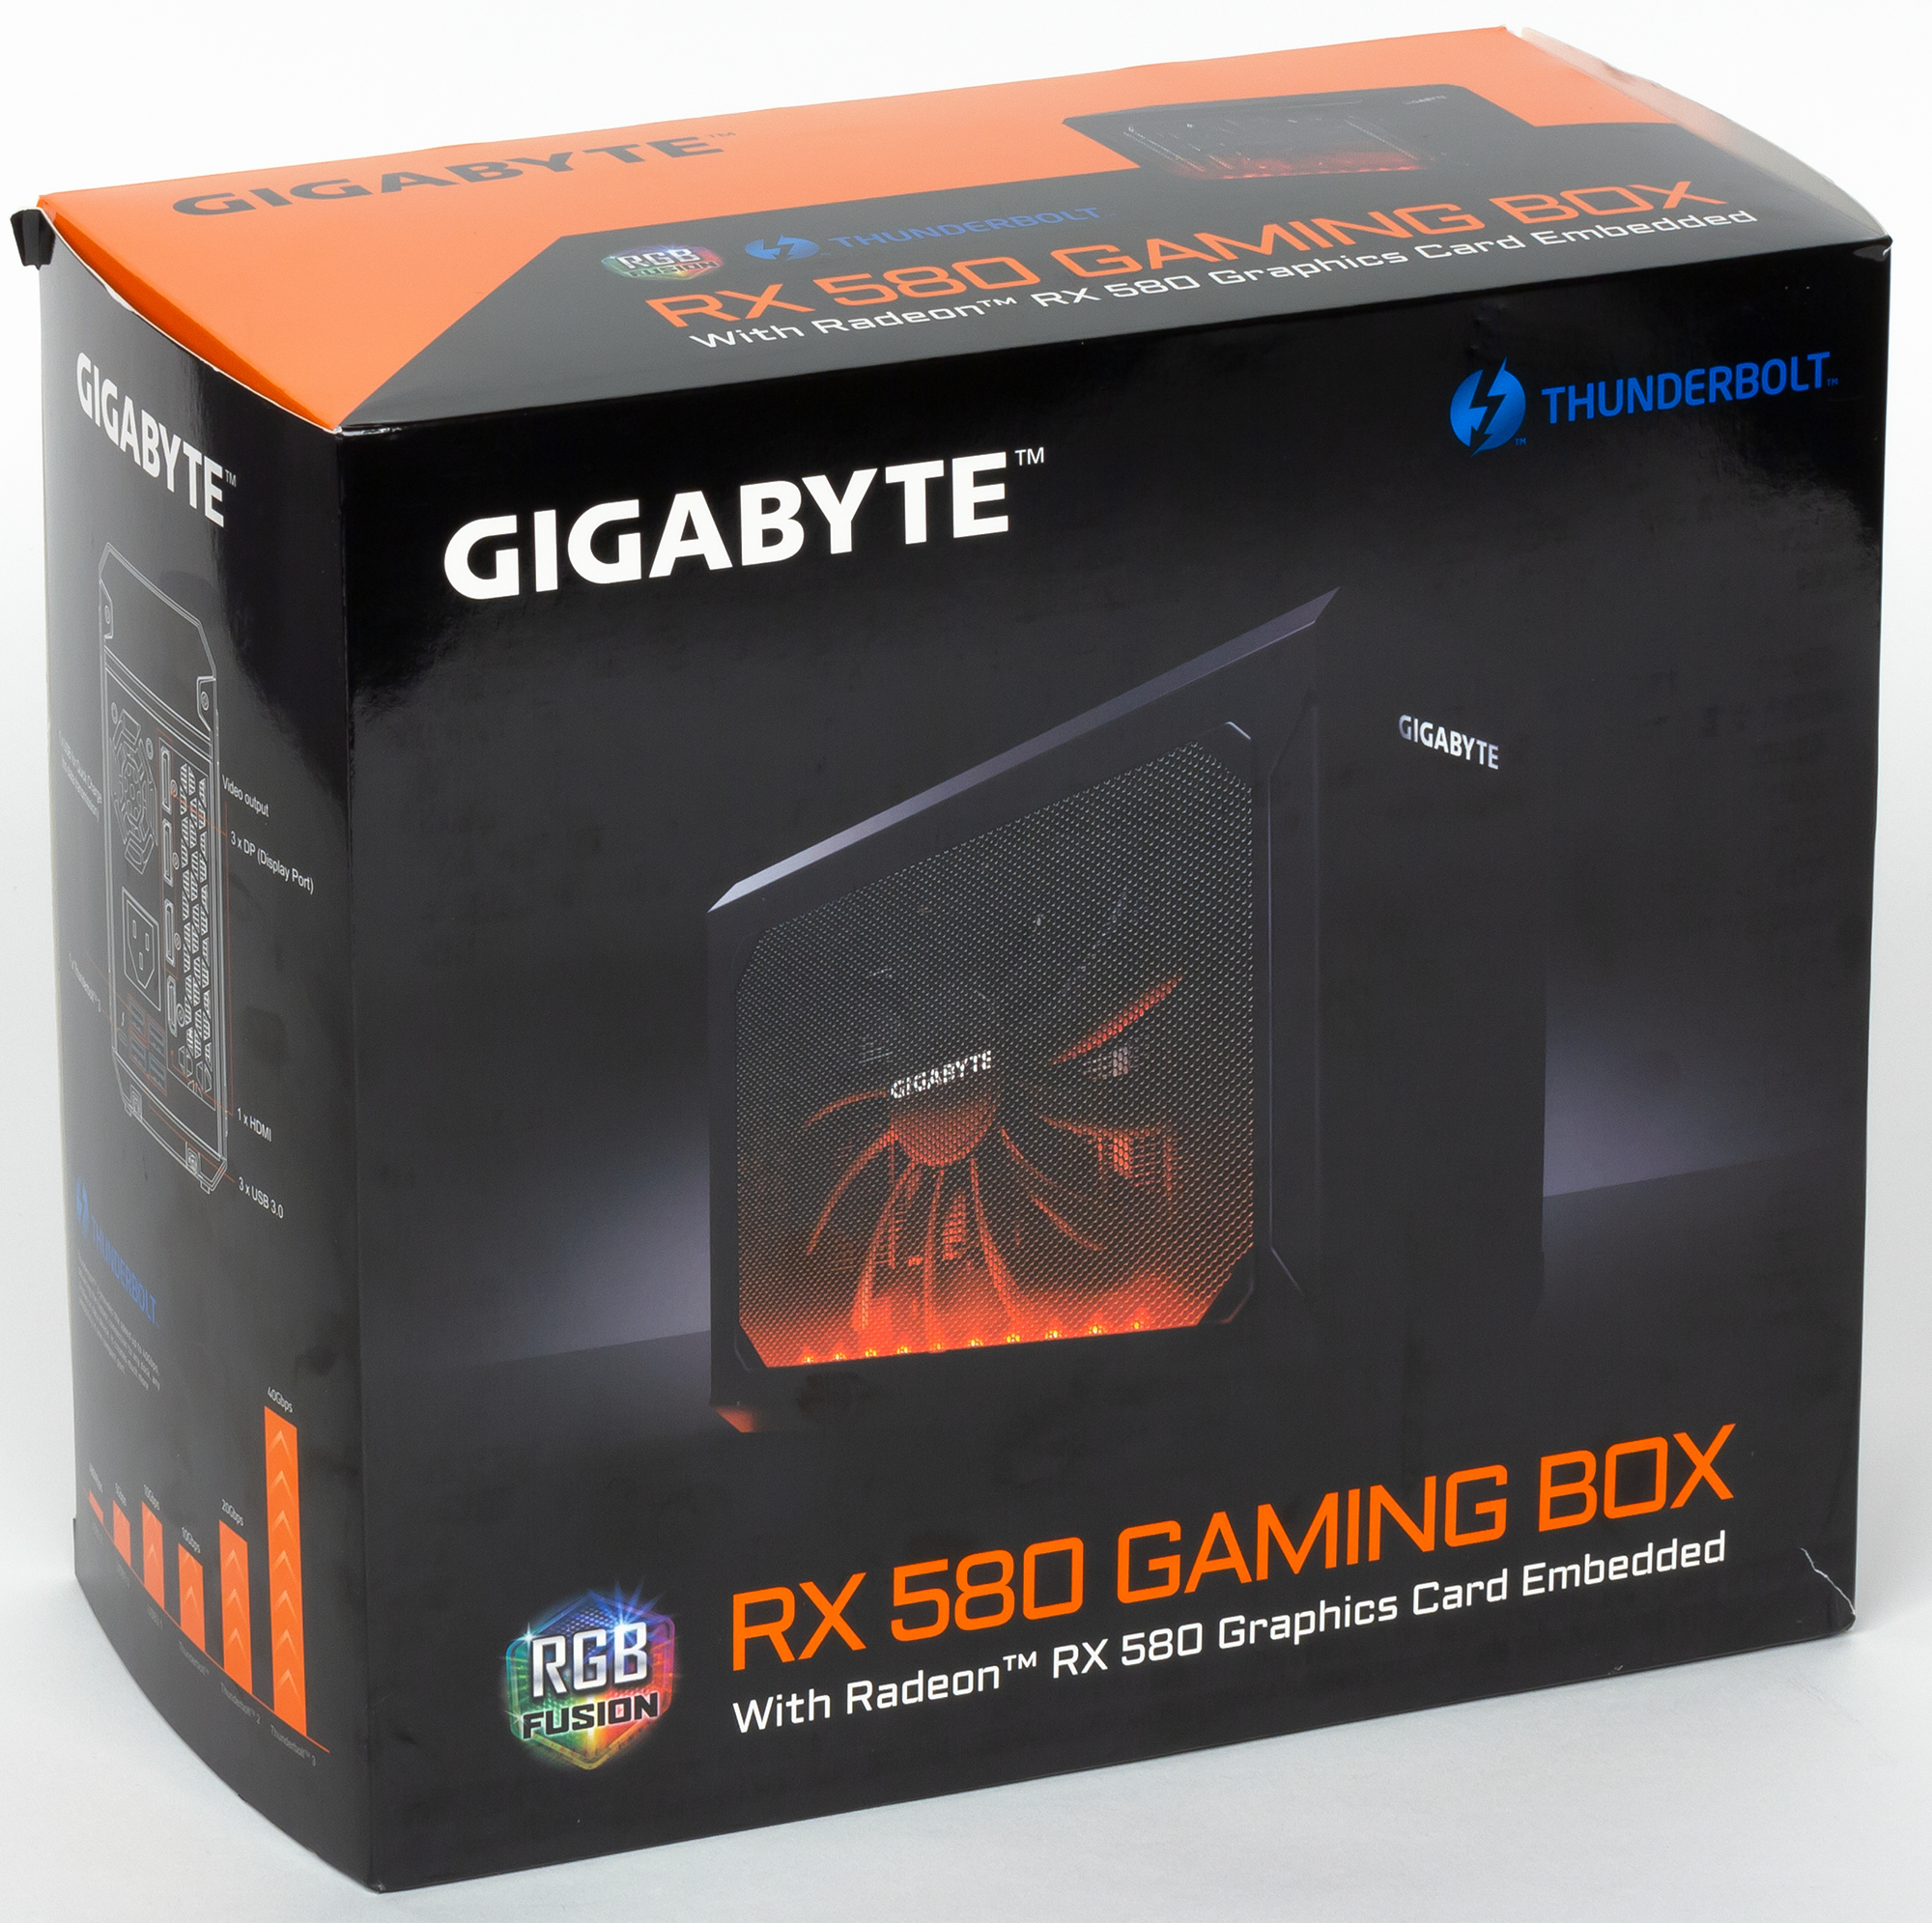 Gigabyte gaming box. RX 580 Gigabyte. Gigabyte RX 580 Gaming Box. Внешняя видеокарта Thunderbolt. Внешний блок для видеокарты.